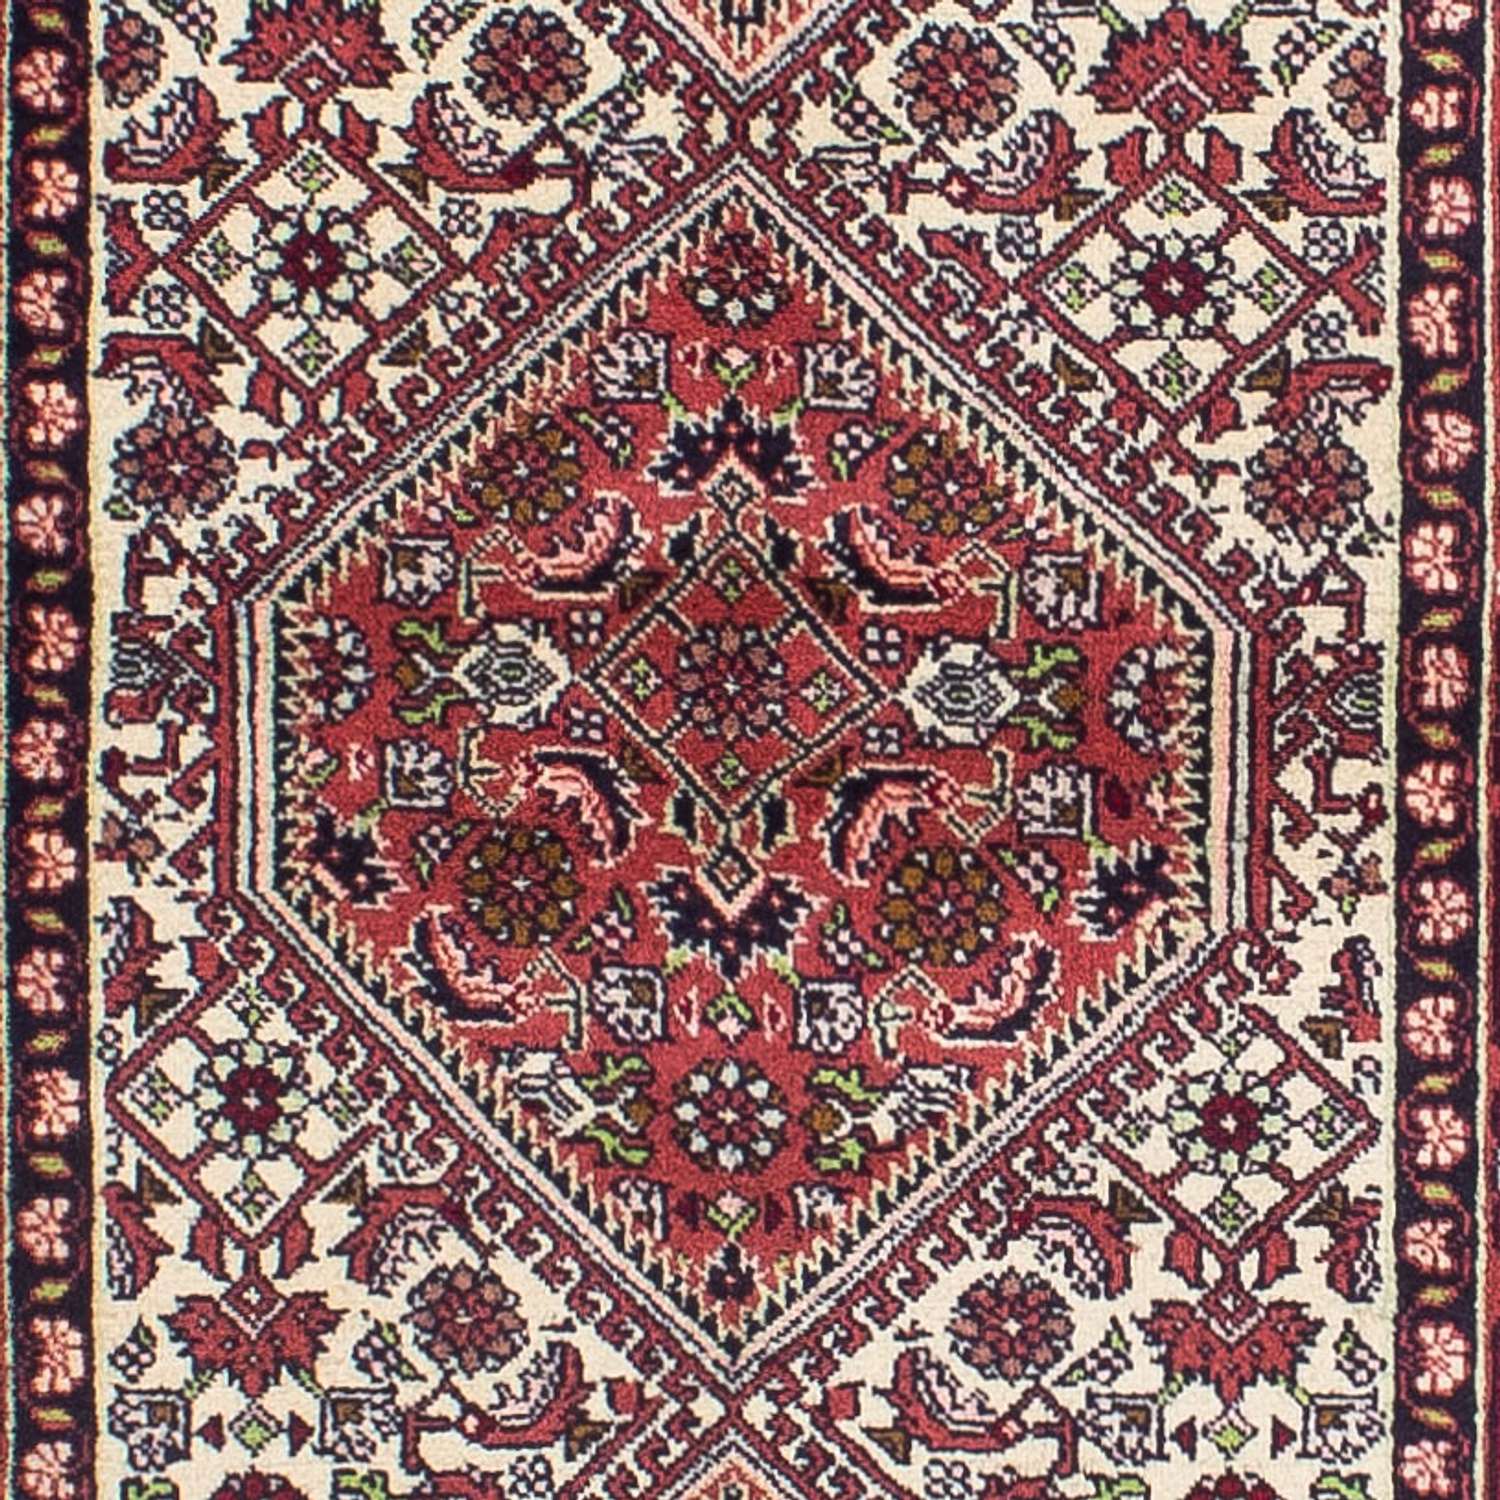 Tapis de couloir Tapis persan - Bidjar - 308 x 81 cm - rouge